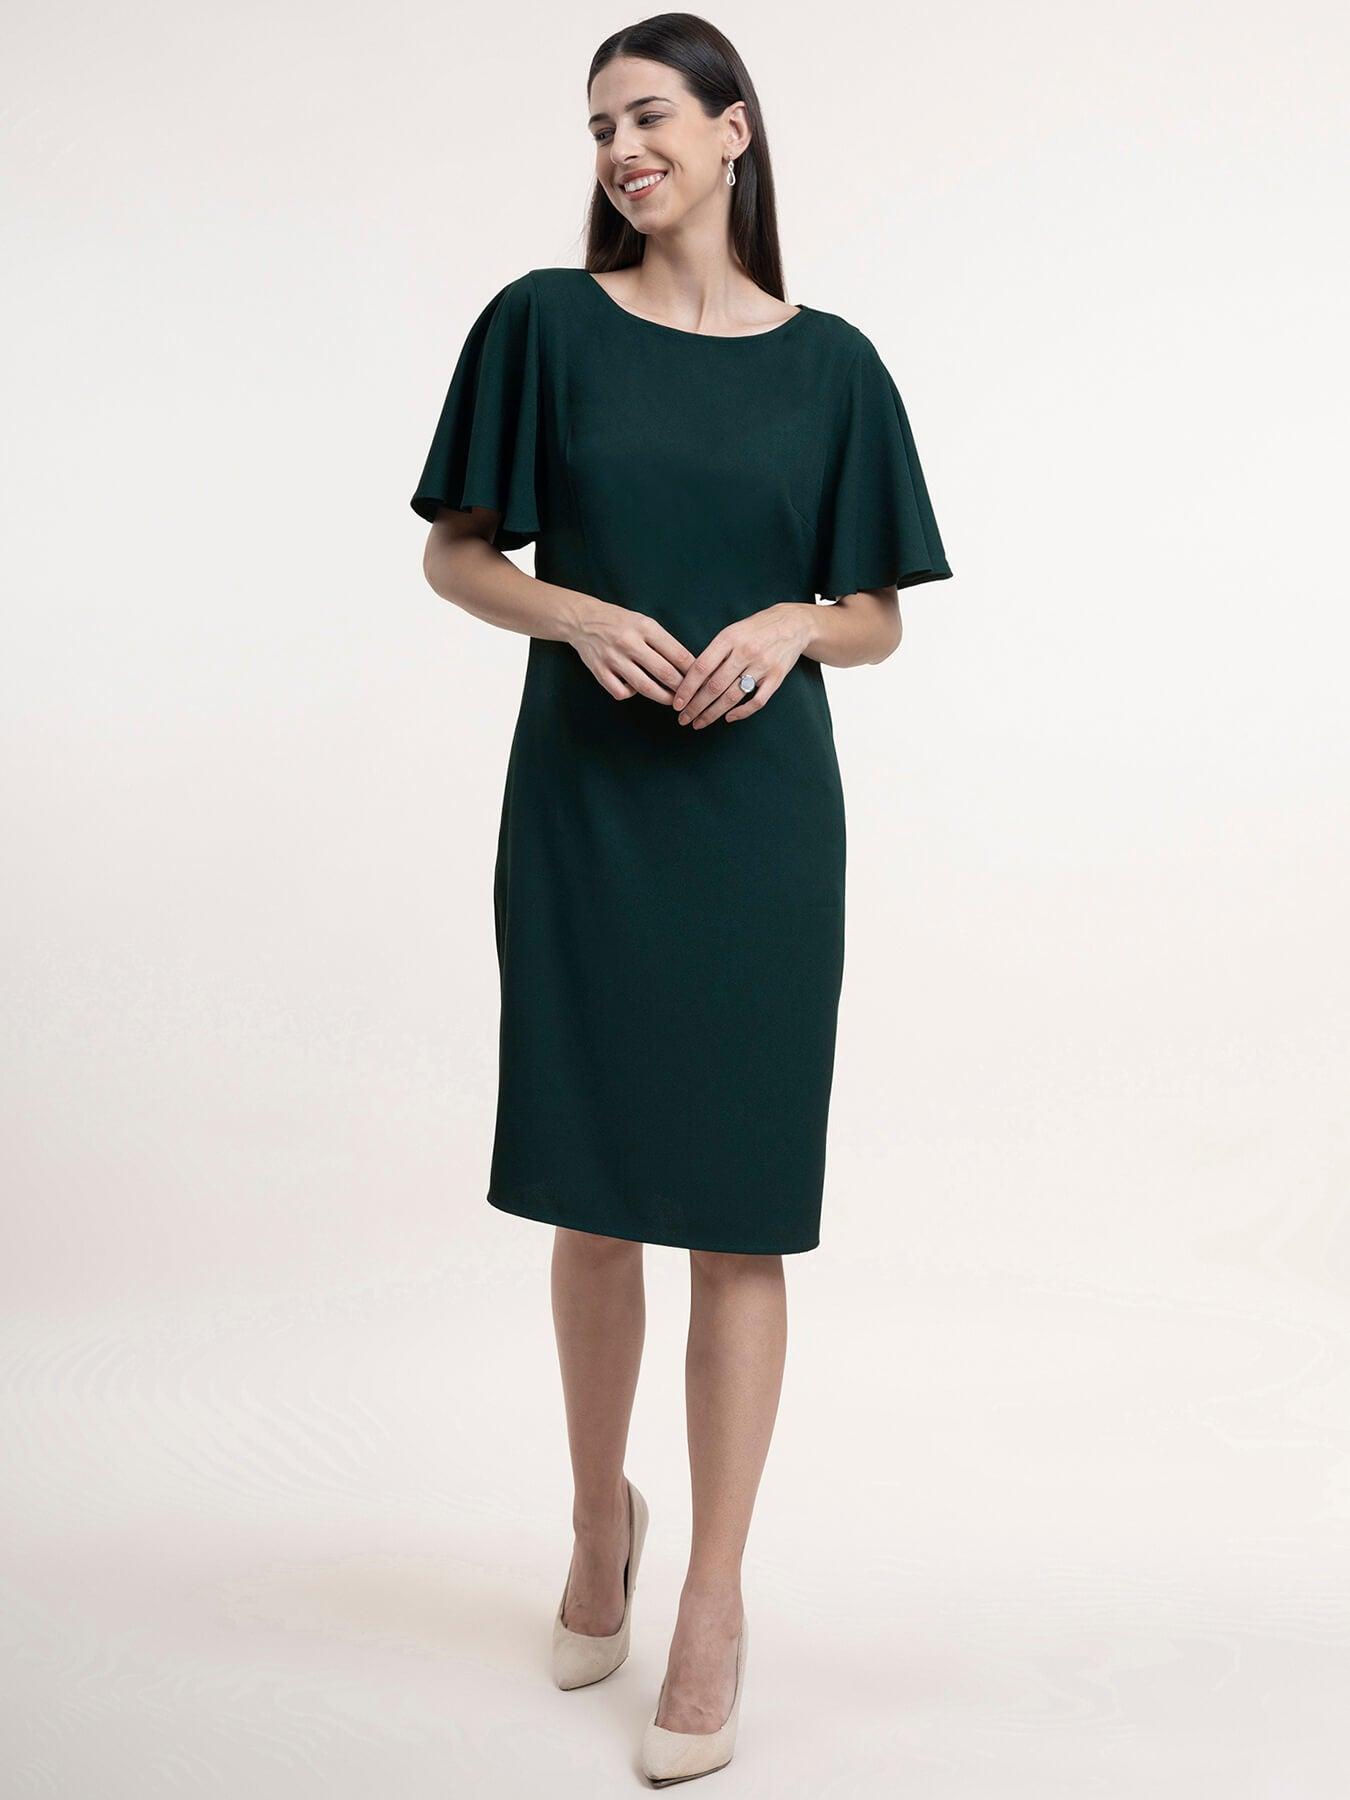 Bell Sleeve Shift Dress - Dark Green| Formal Dresses